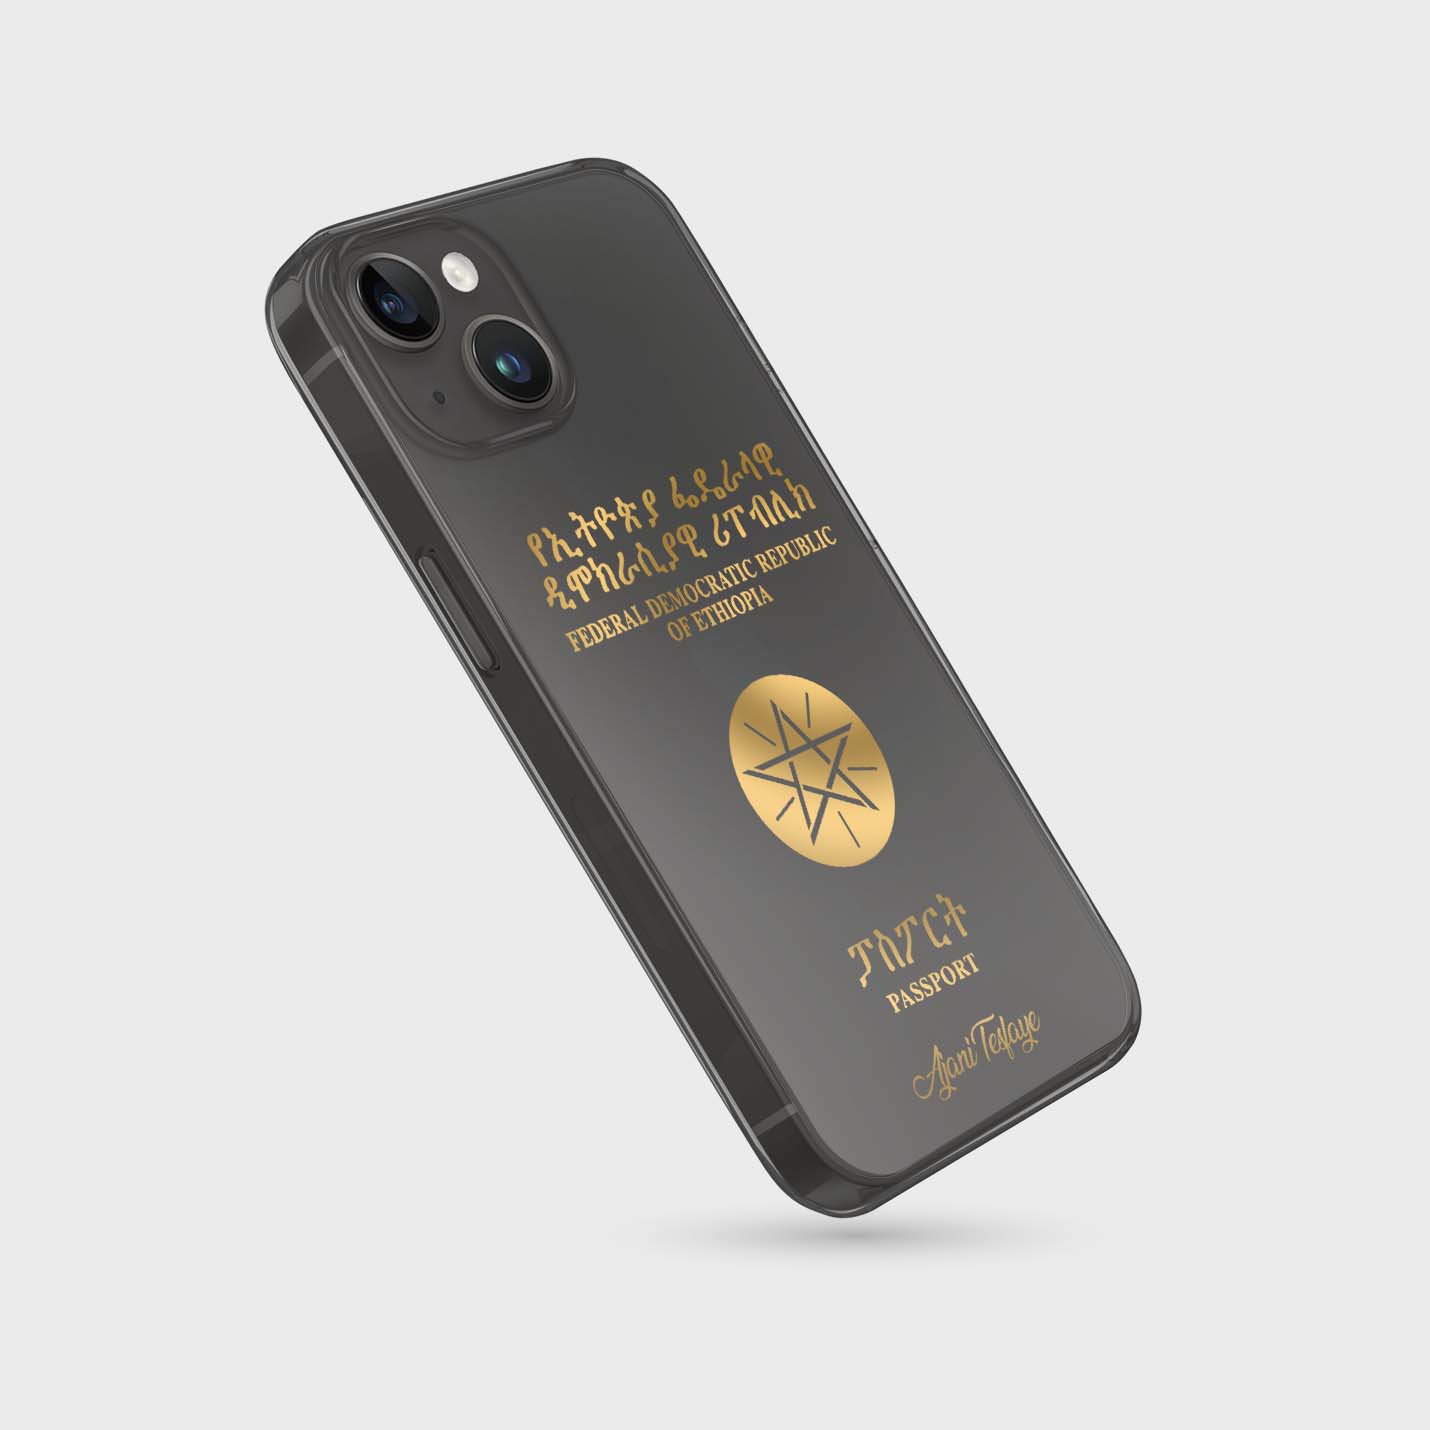 Handyhüllen mit Reisepass - Äthiopien (Ethiopia) - 1instaphone